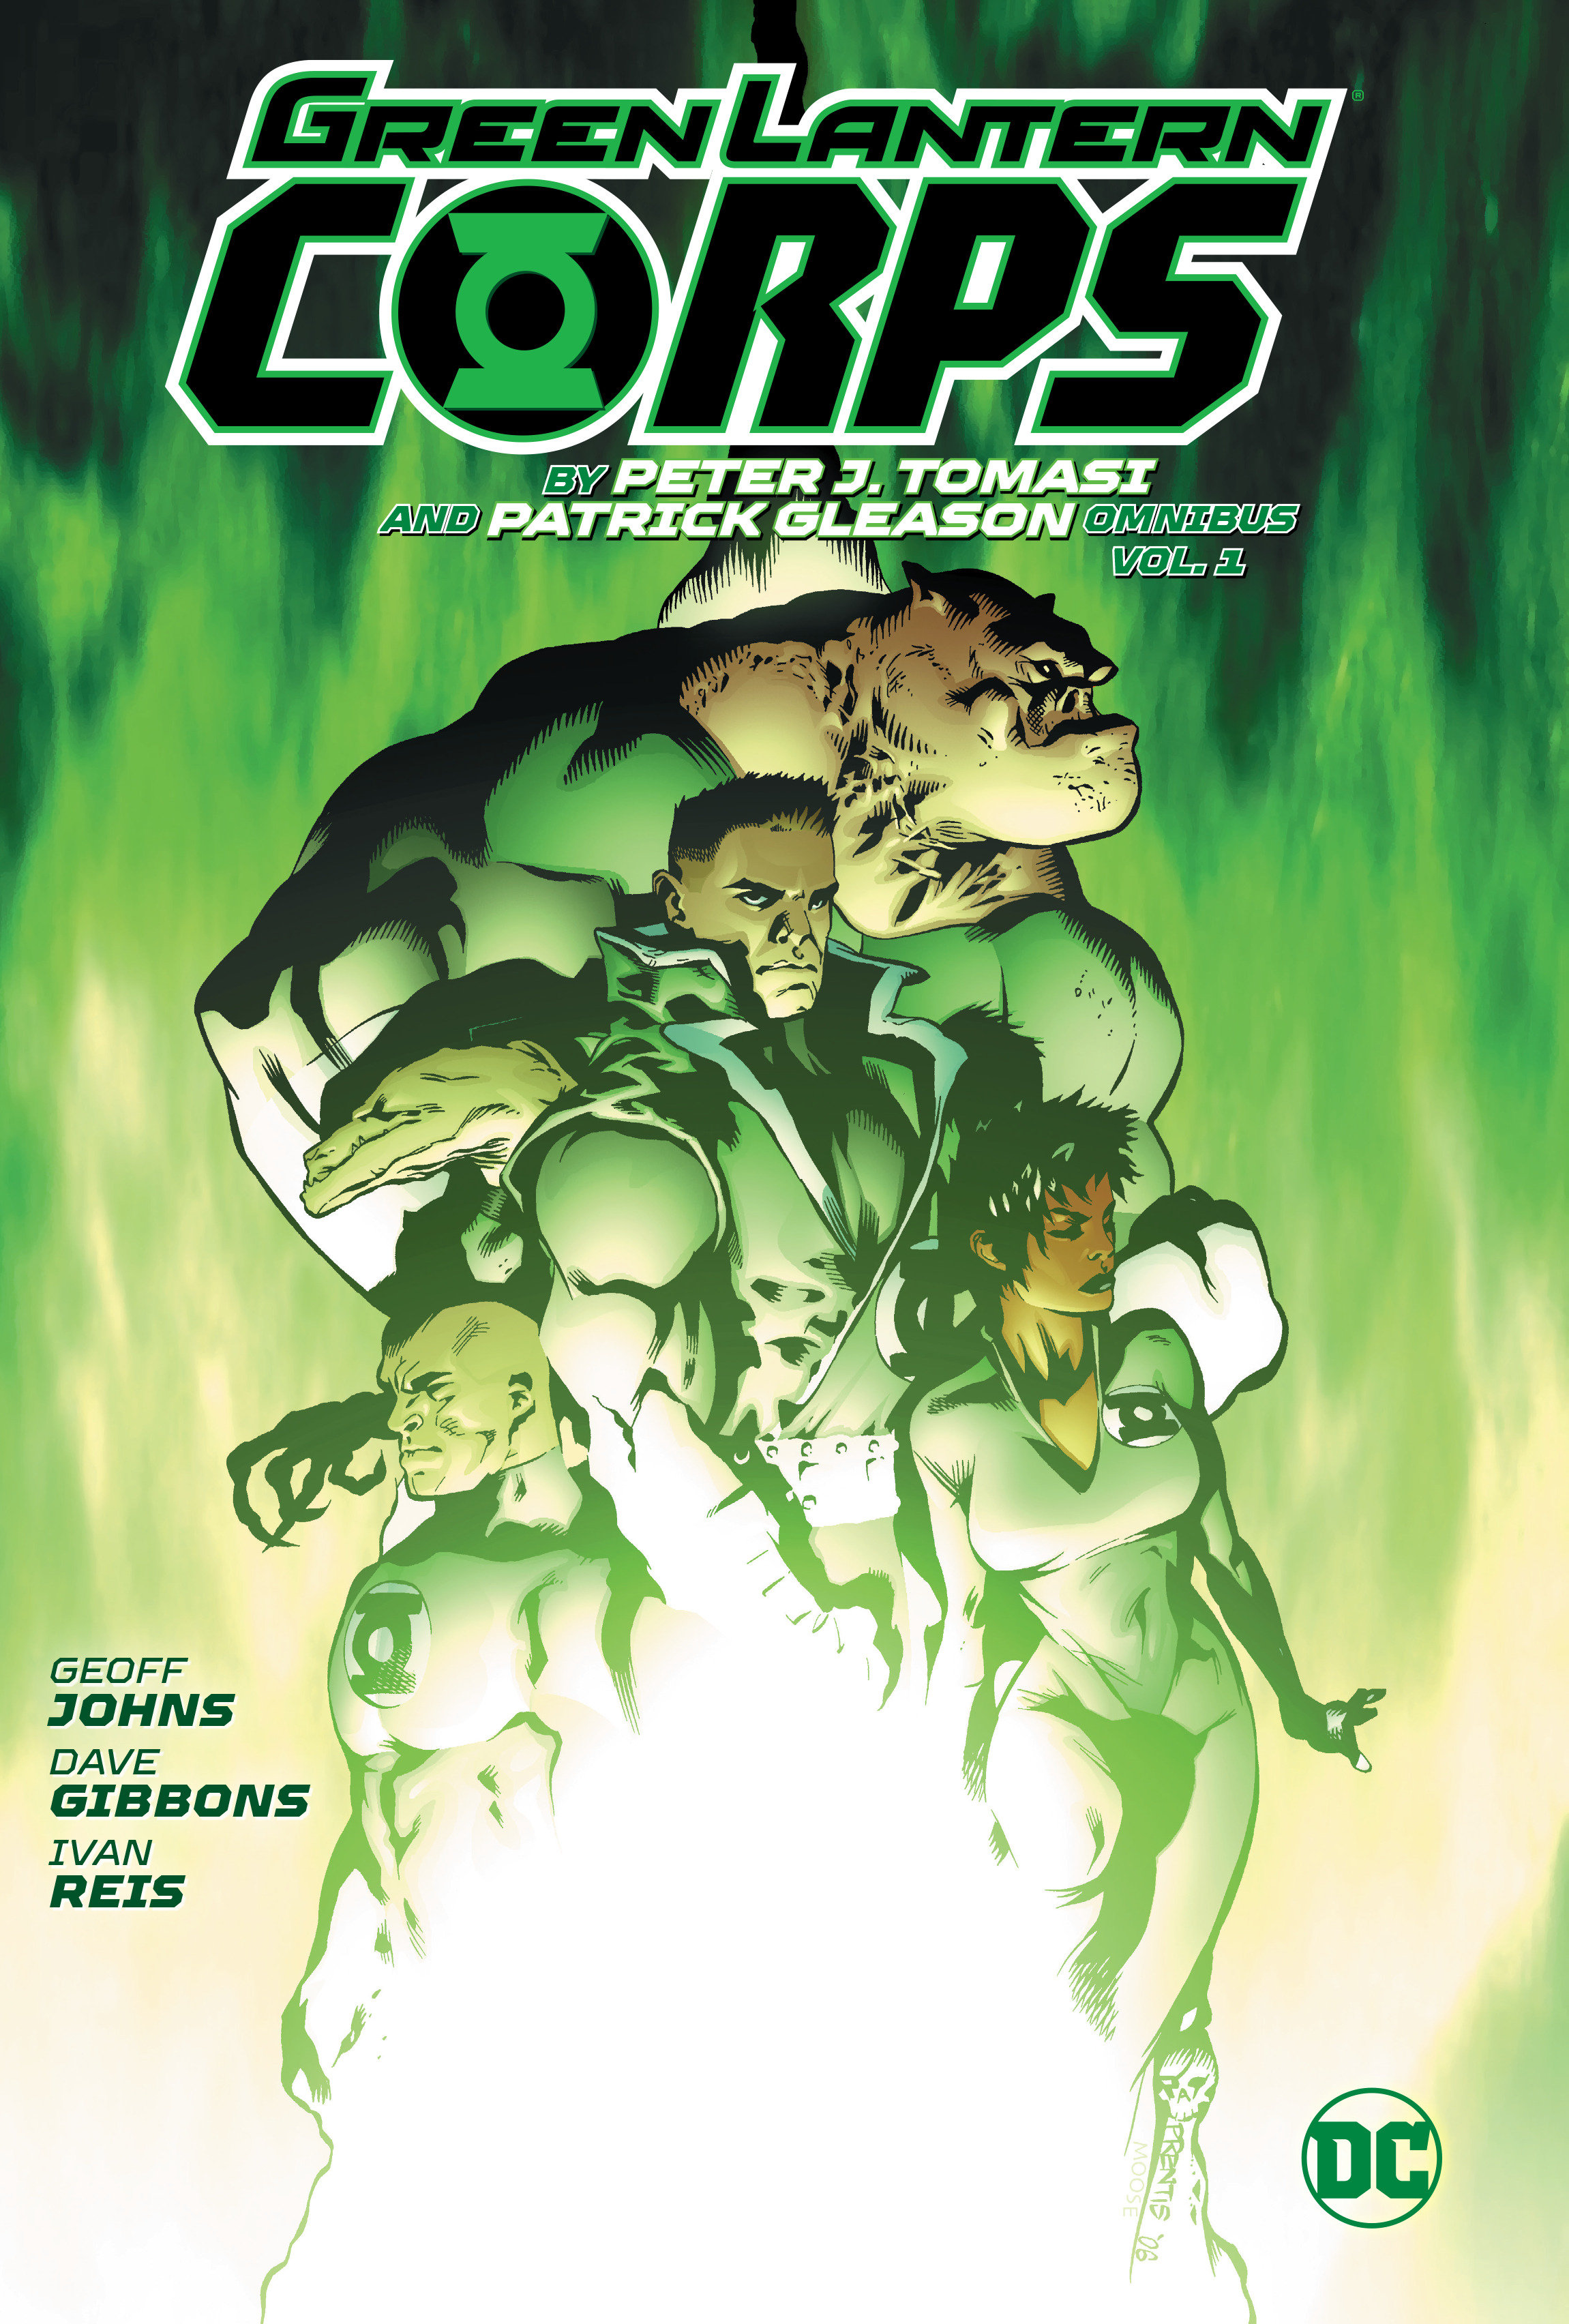 Green Lantern Corps by Peter J Tomasi and Patrick Gleason Omnibus Hardcover Volume 1